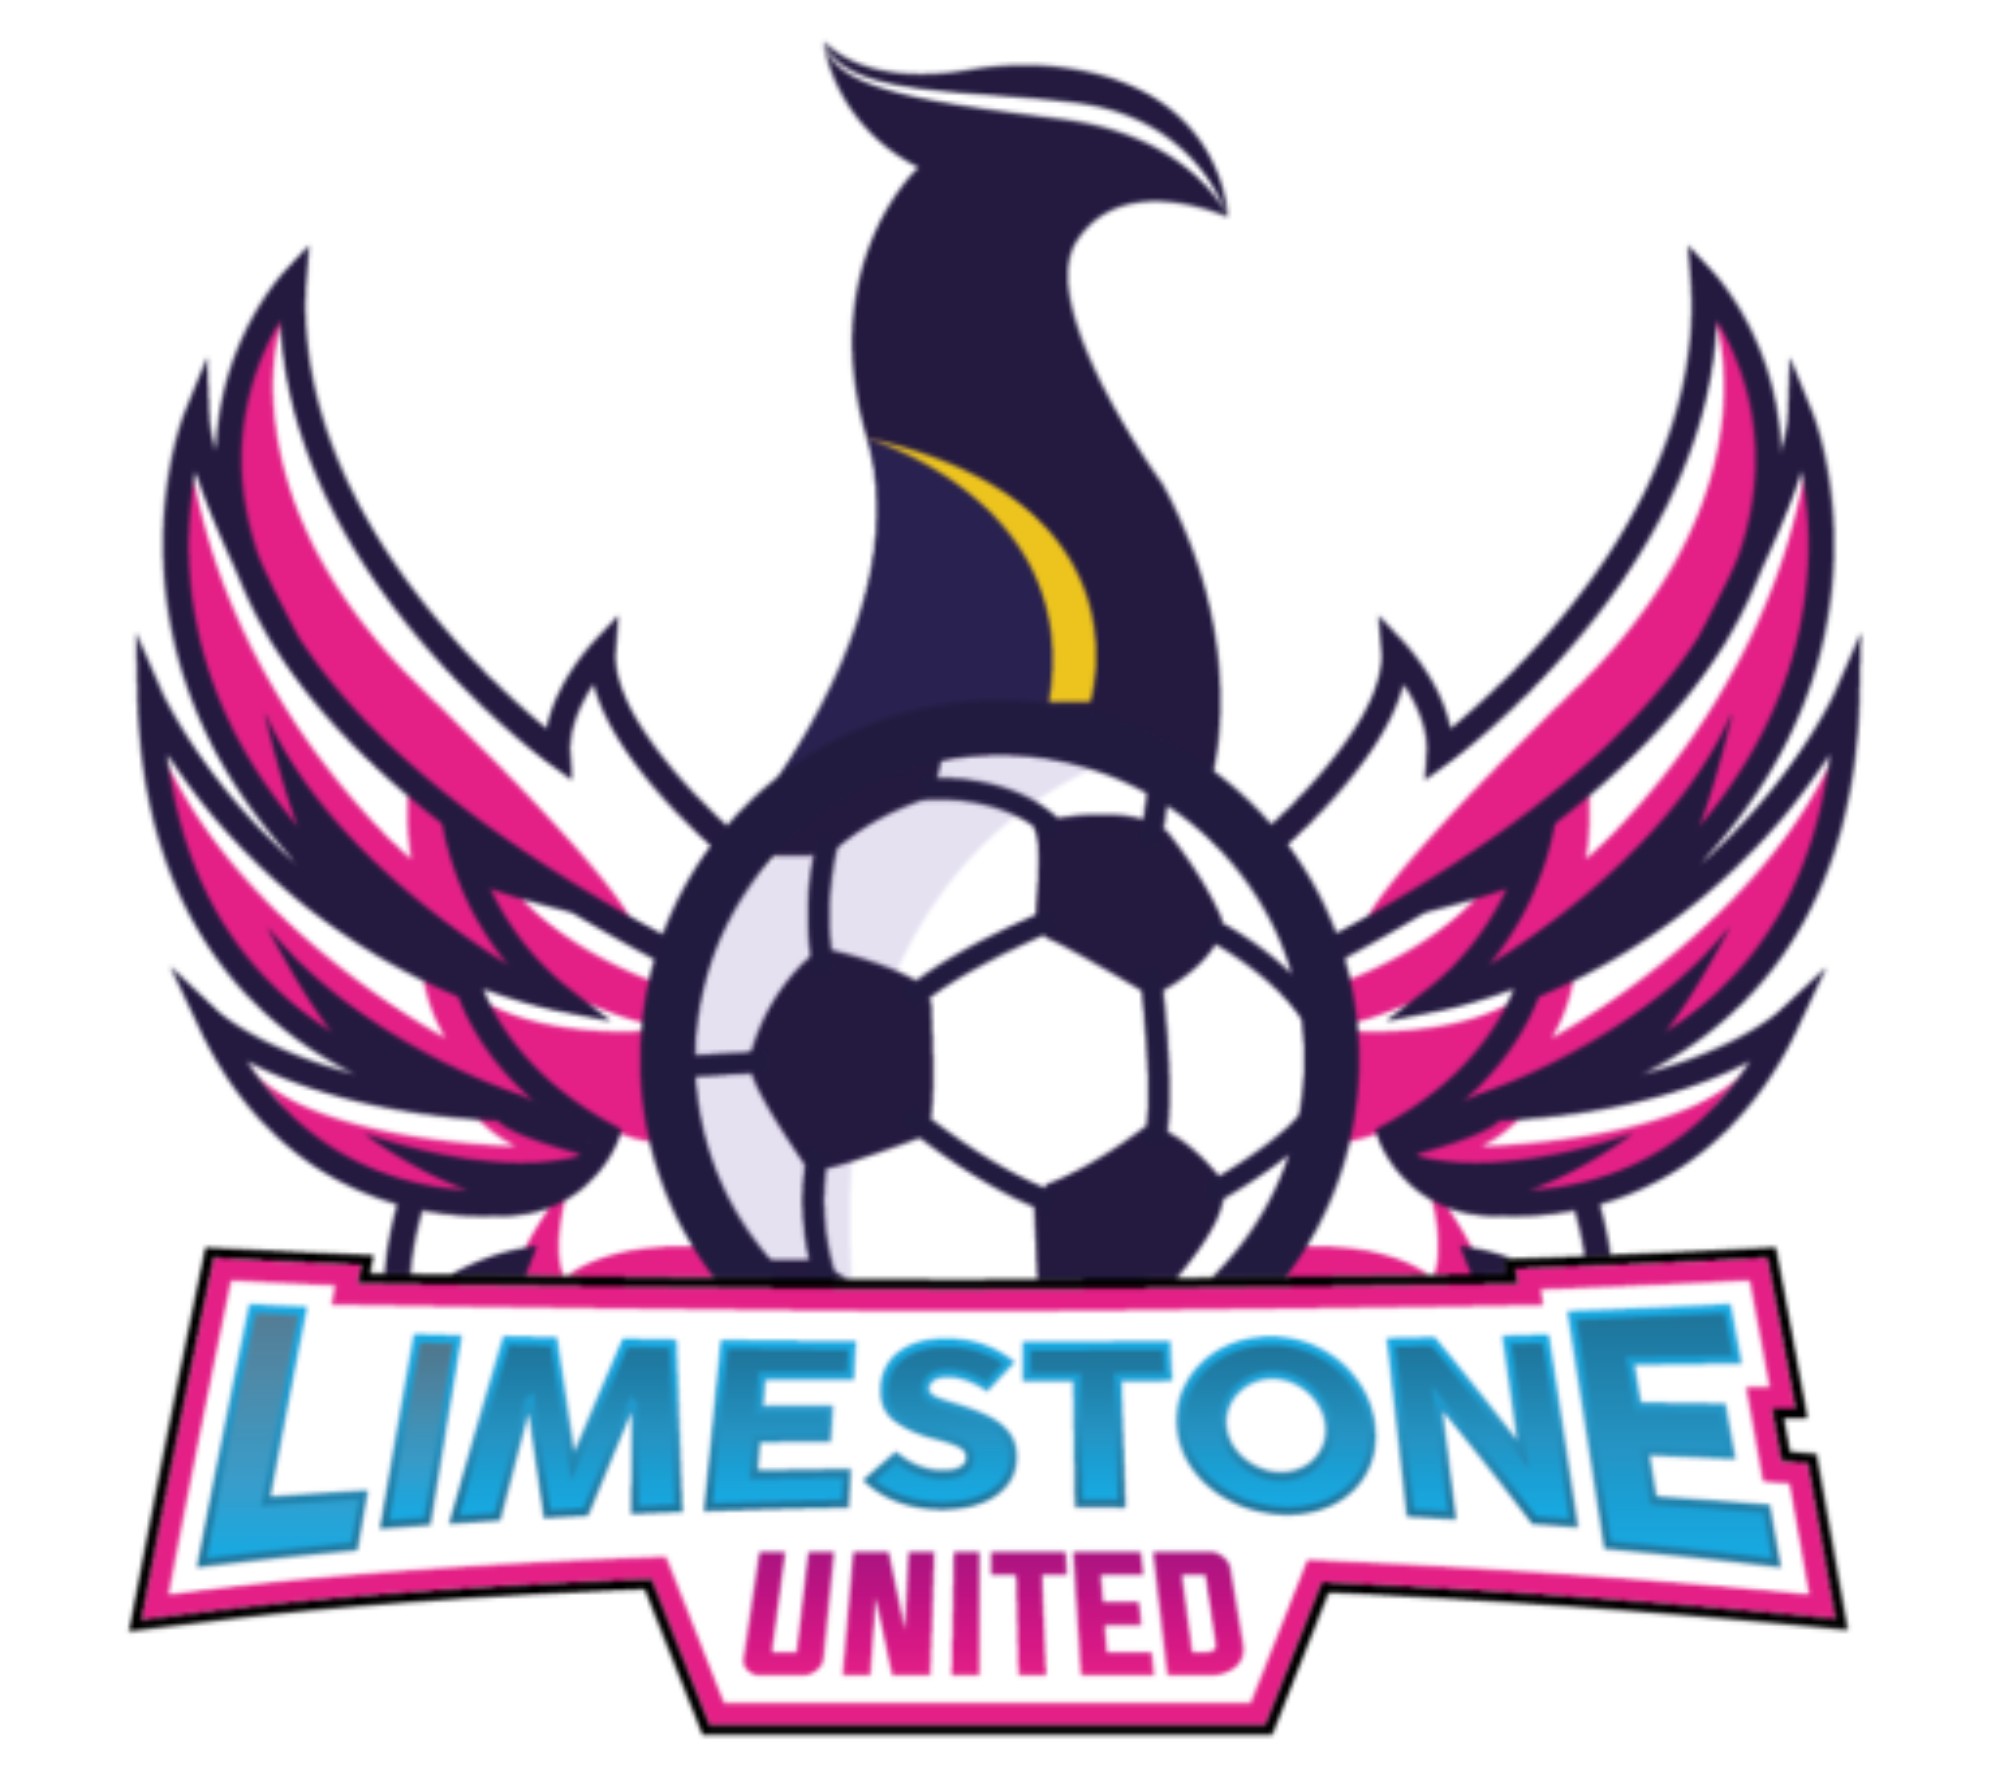 Limestone United football club